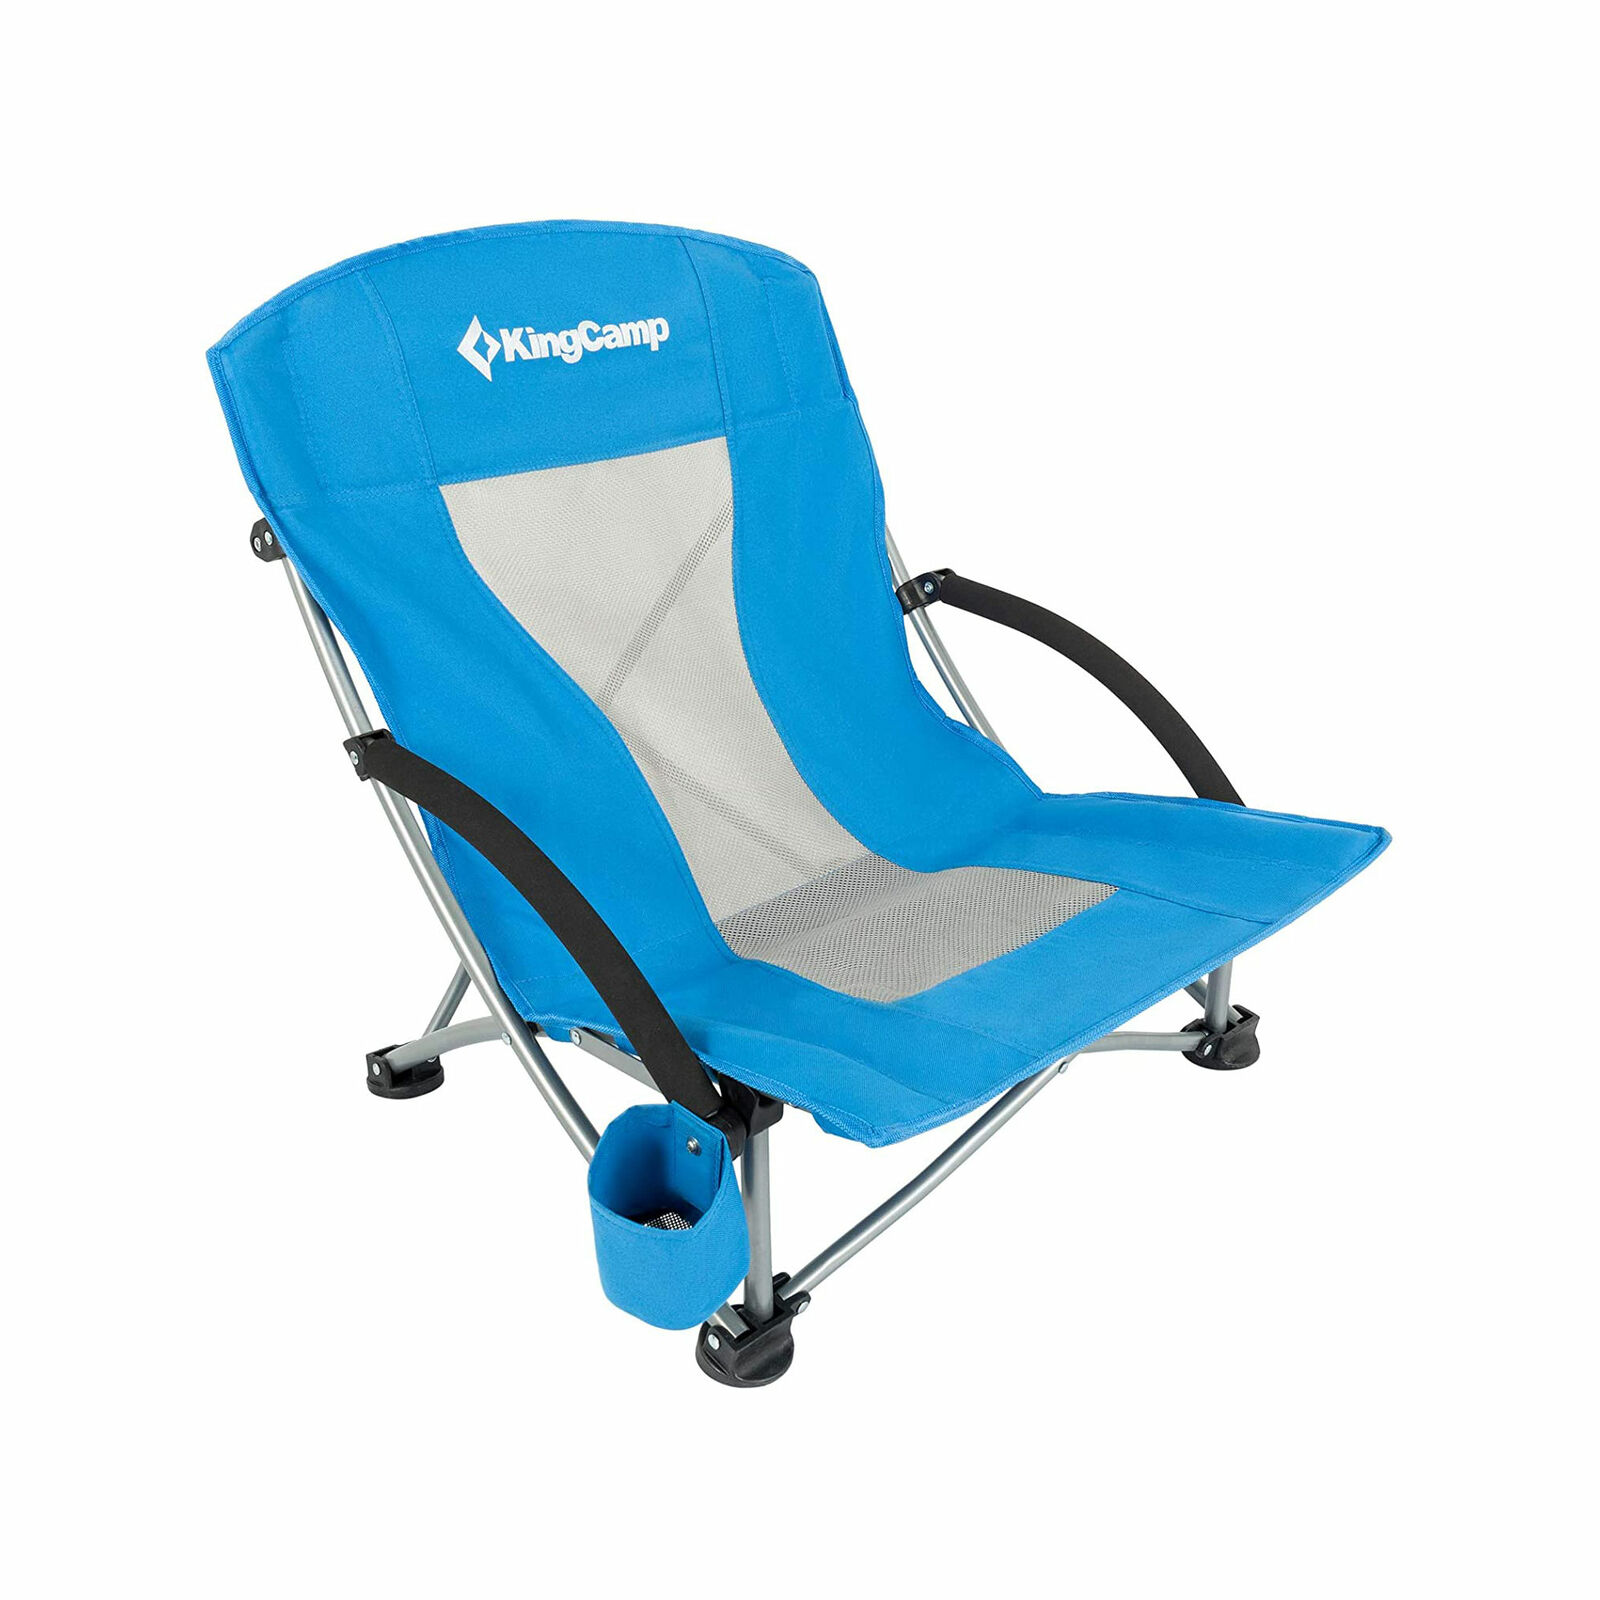 KingCamp Lightweight Strong Folding Beach Chair with Mesh Back,